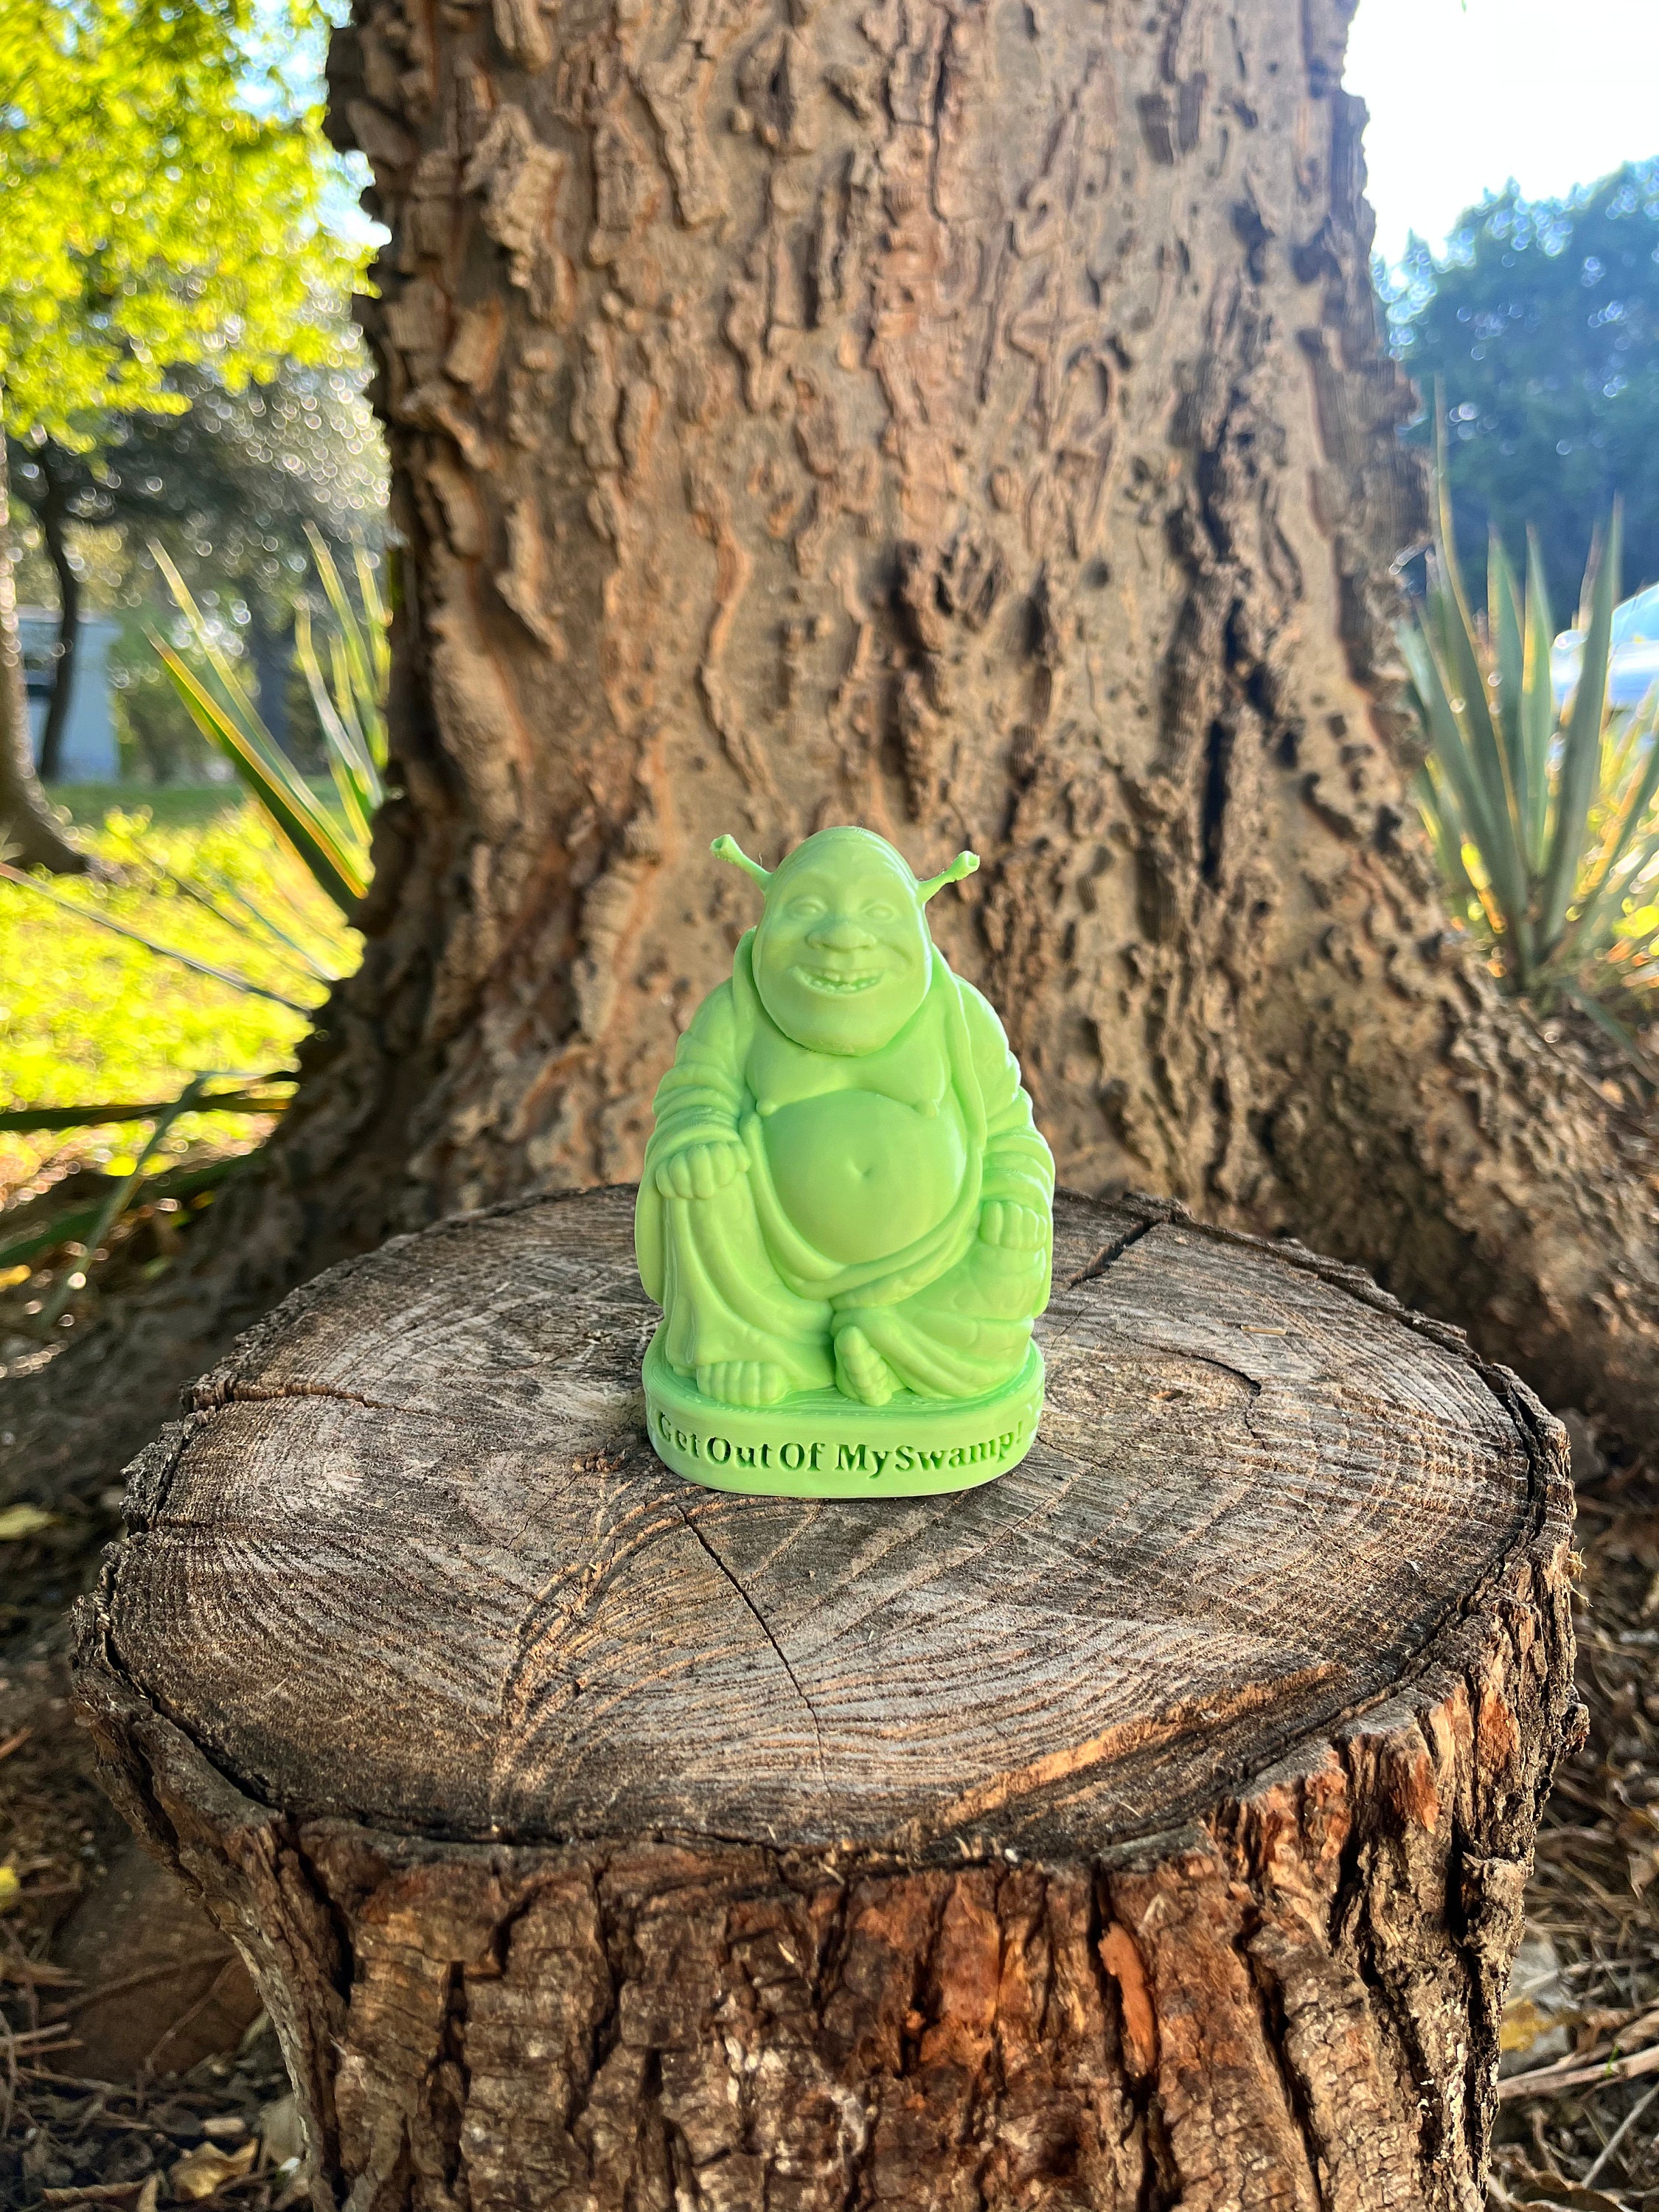 Custom Base Shrek Buddha Statue, get Out of My Swamp 3D Printed, Home Decor,  Desk Ornament, Shrek Figurine 